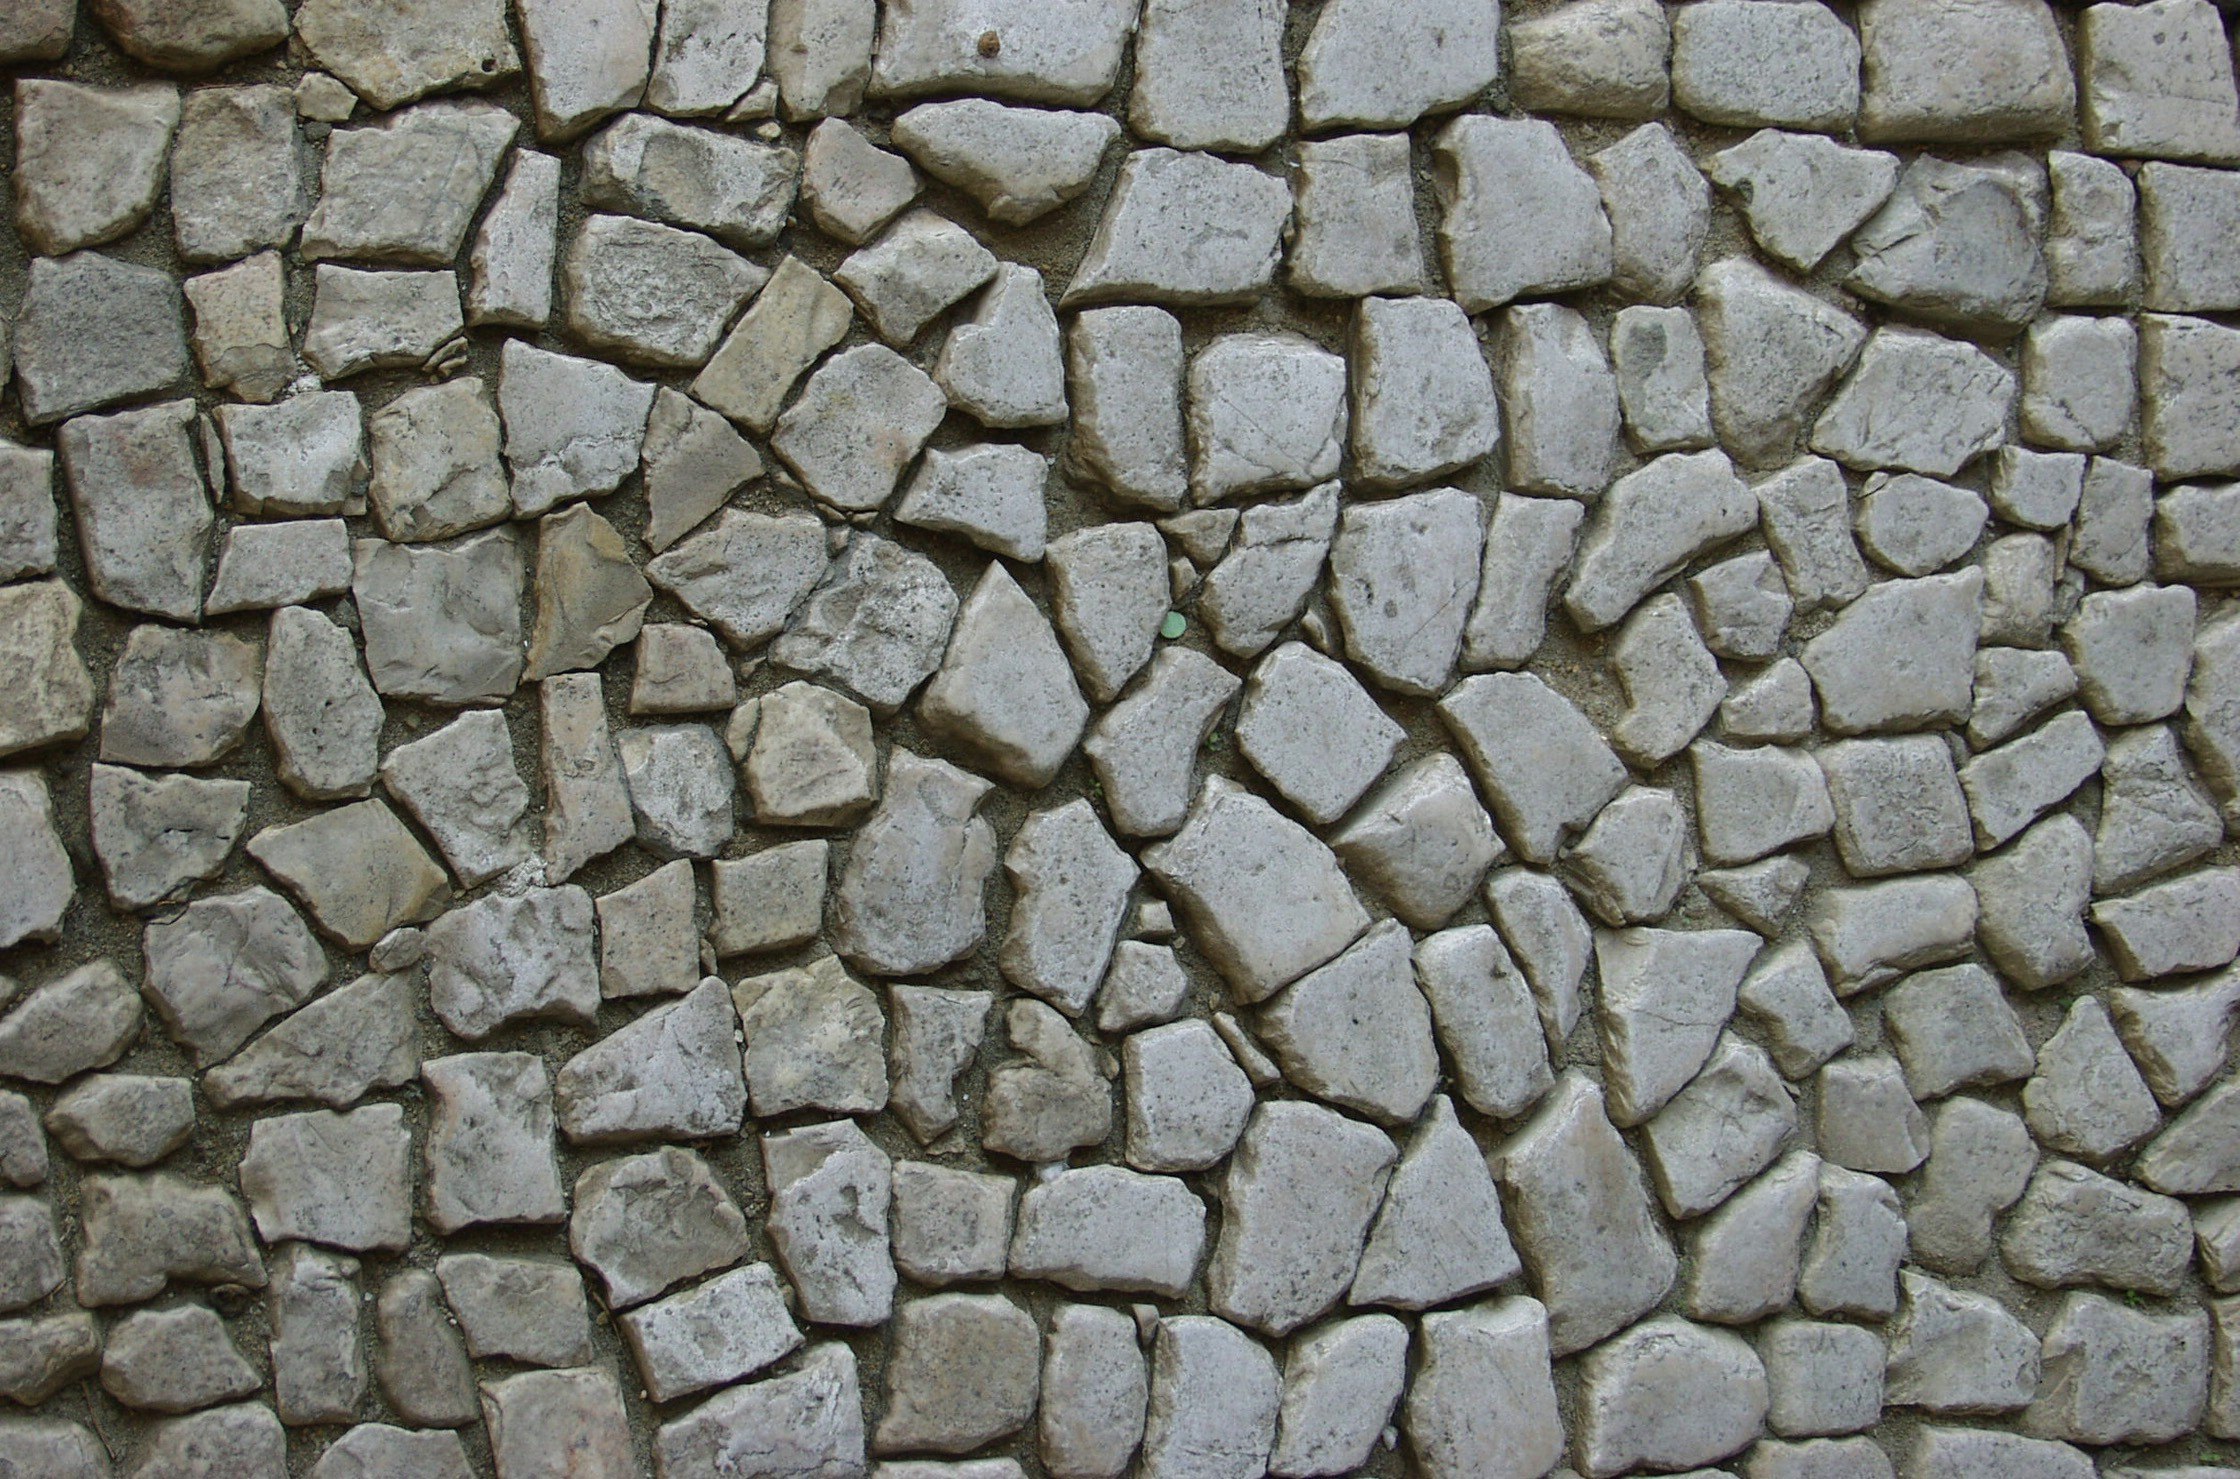 Ground stone